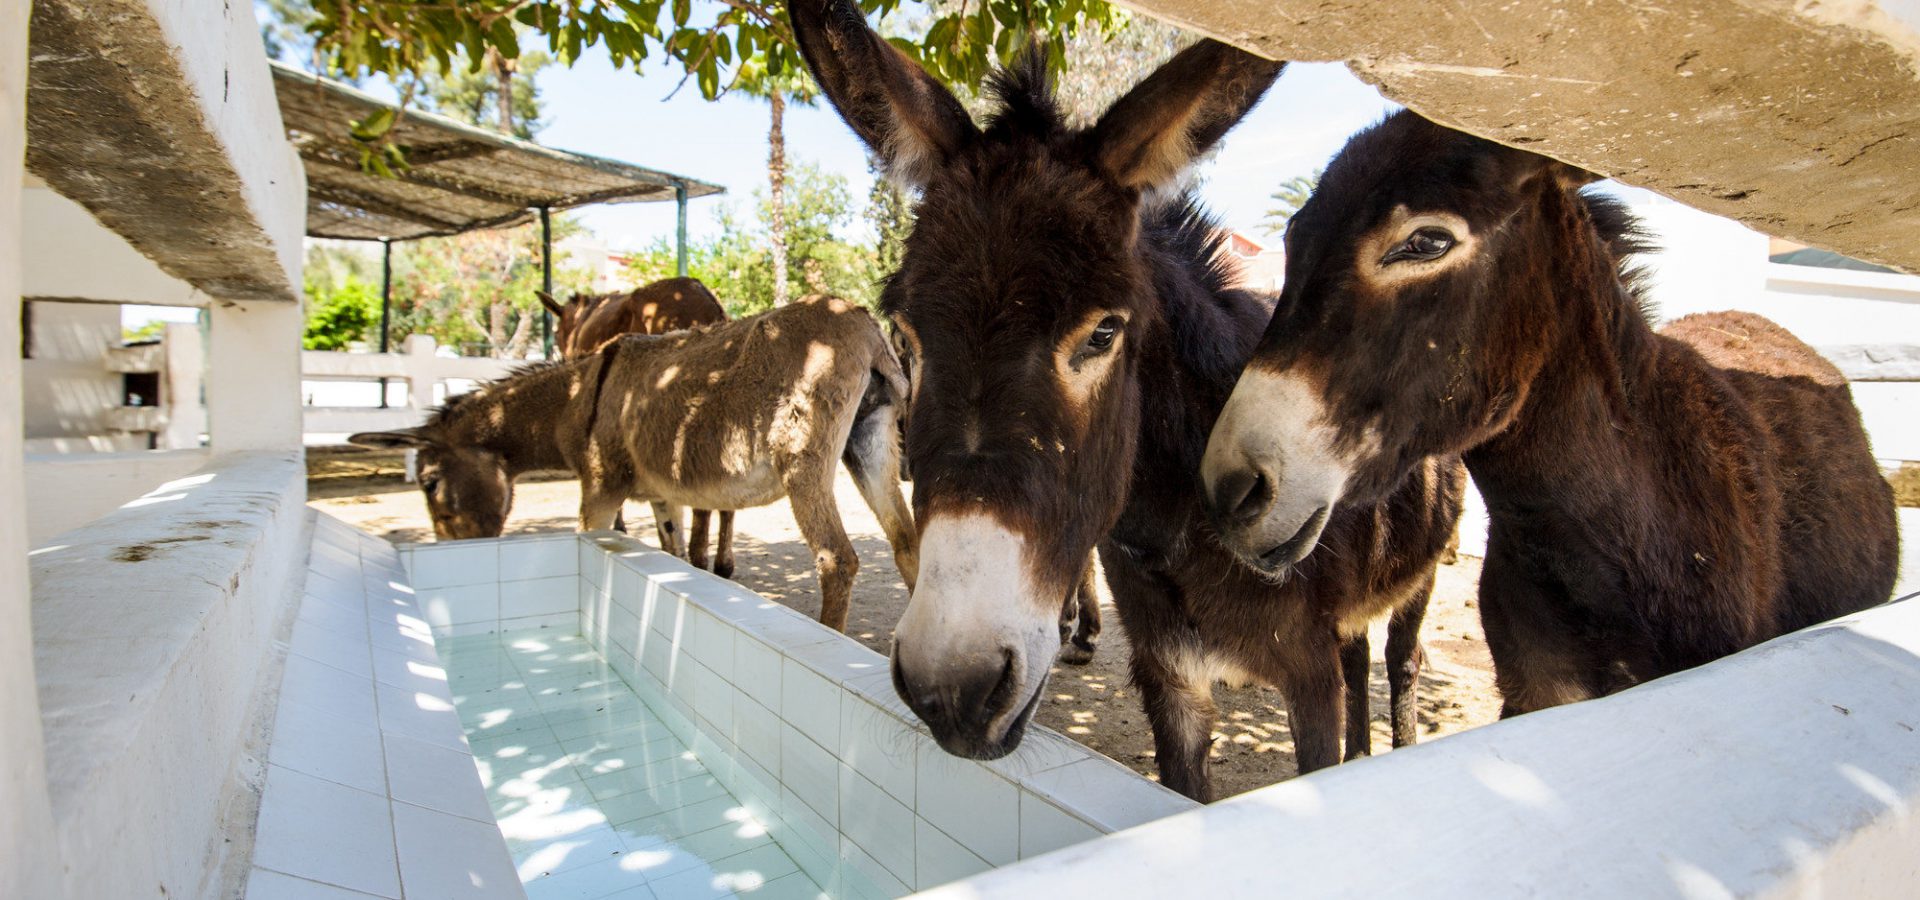 Morocco donkeys drinking water